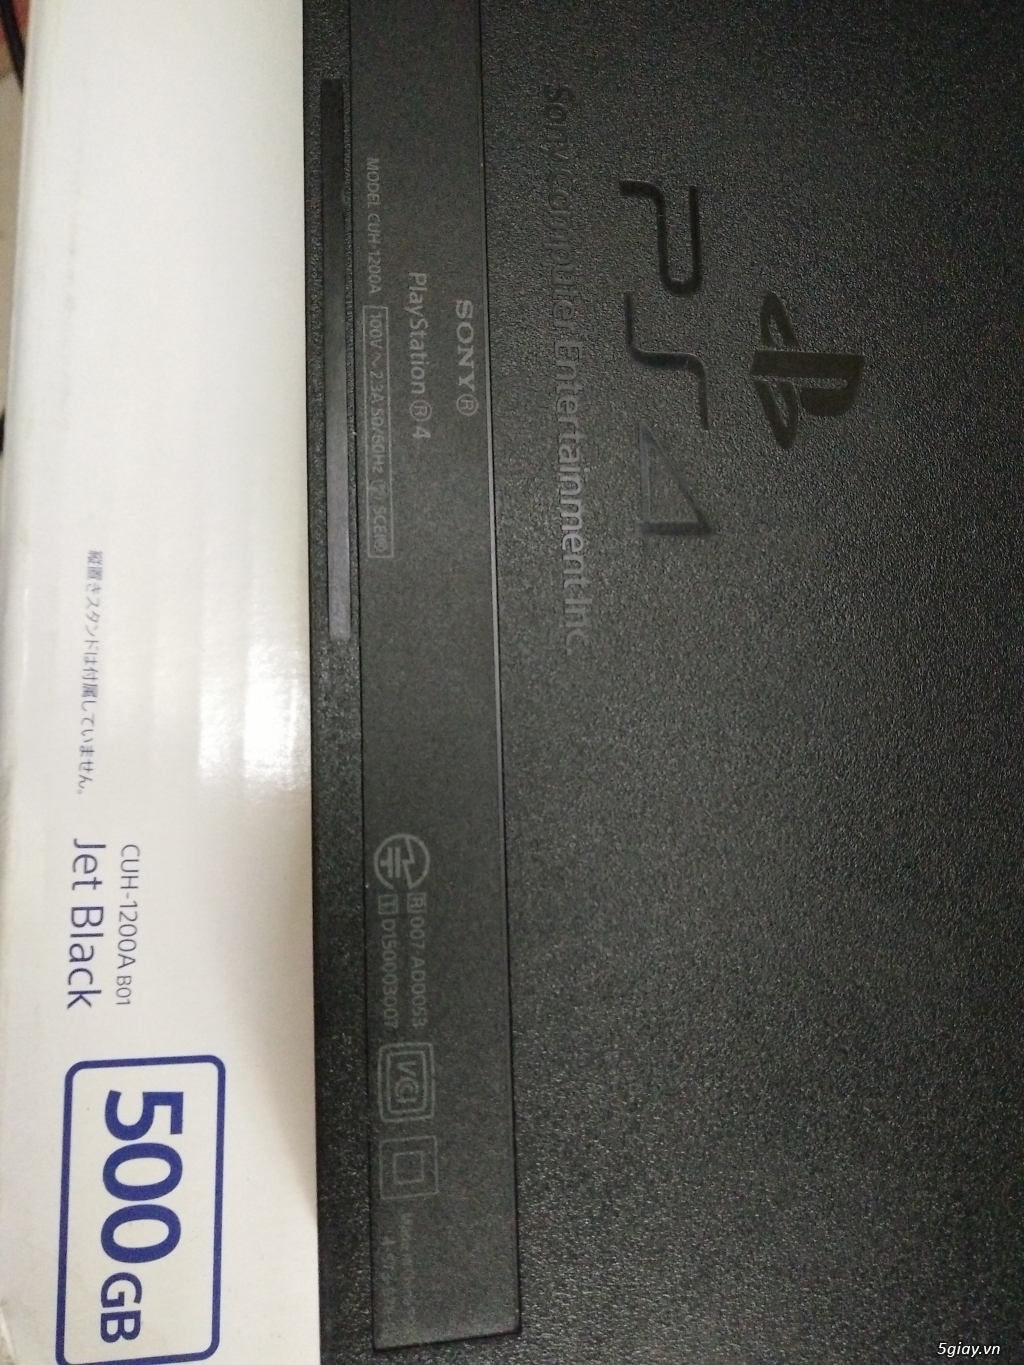 PS4 1200 Fullbox like new 5.05 chơi game chép - 1